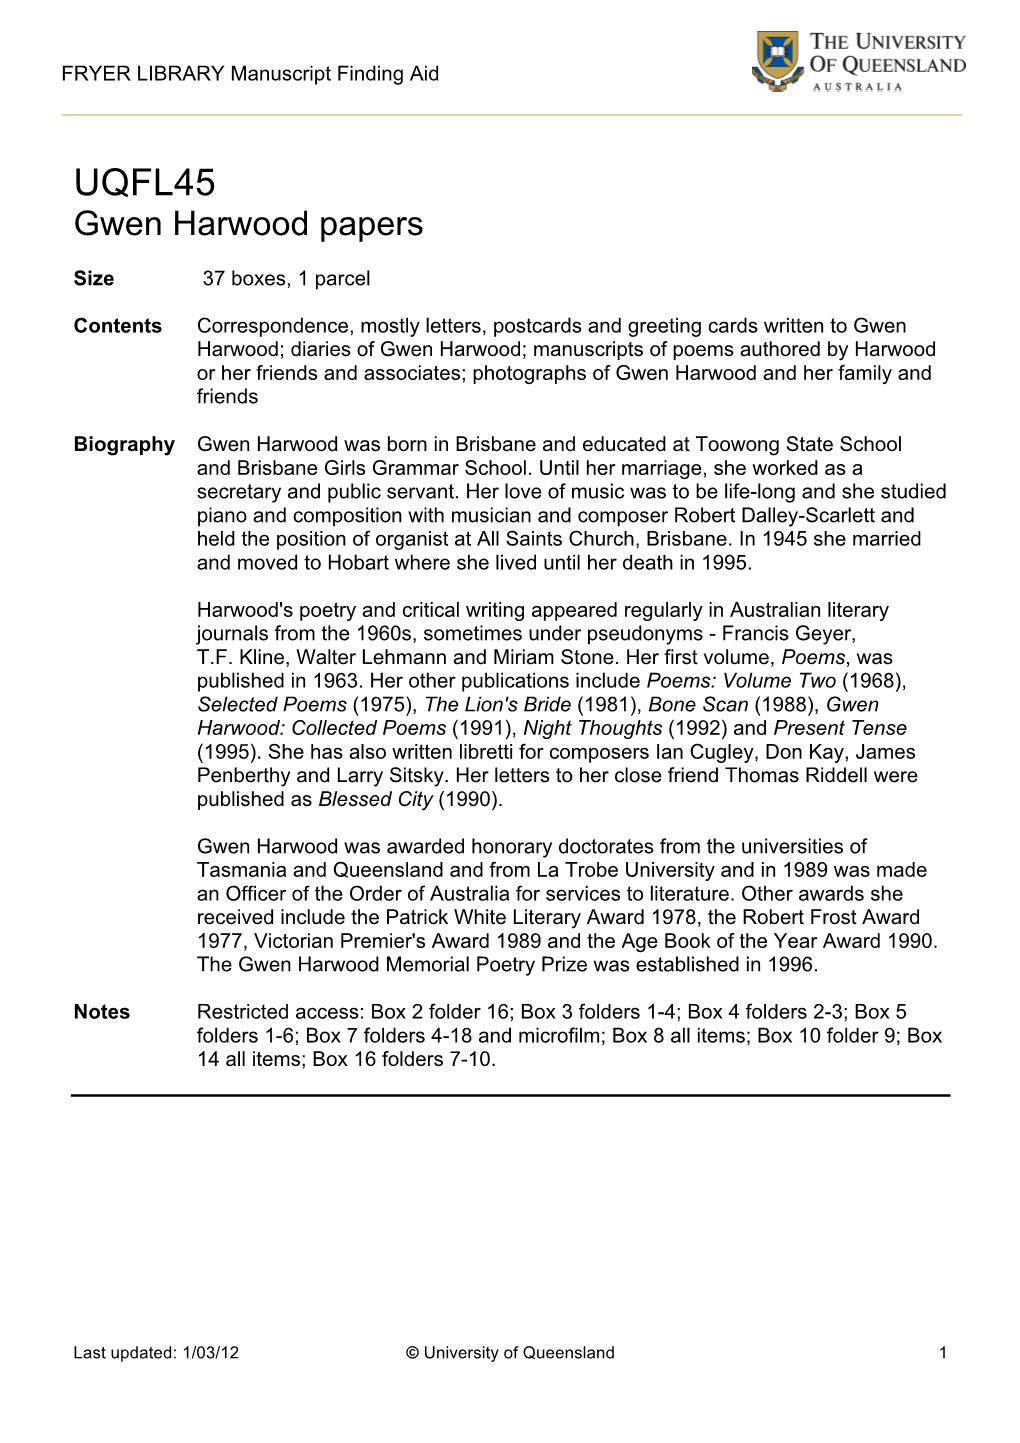 UQFL45 Gwen Harwood Papers